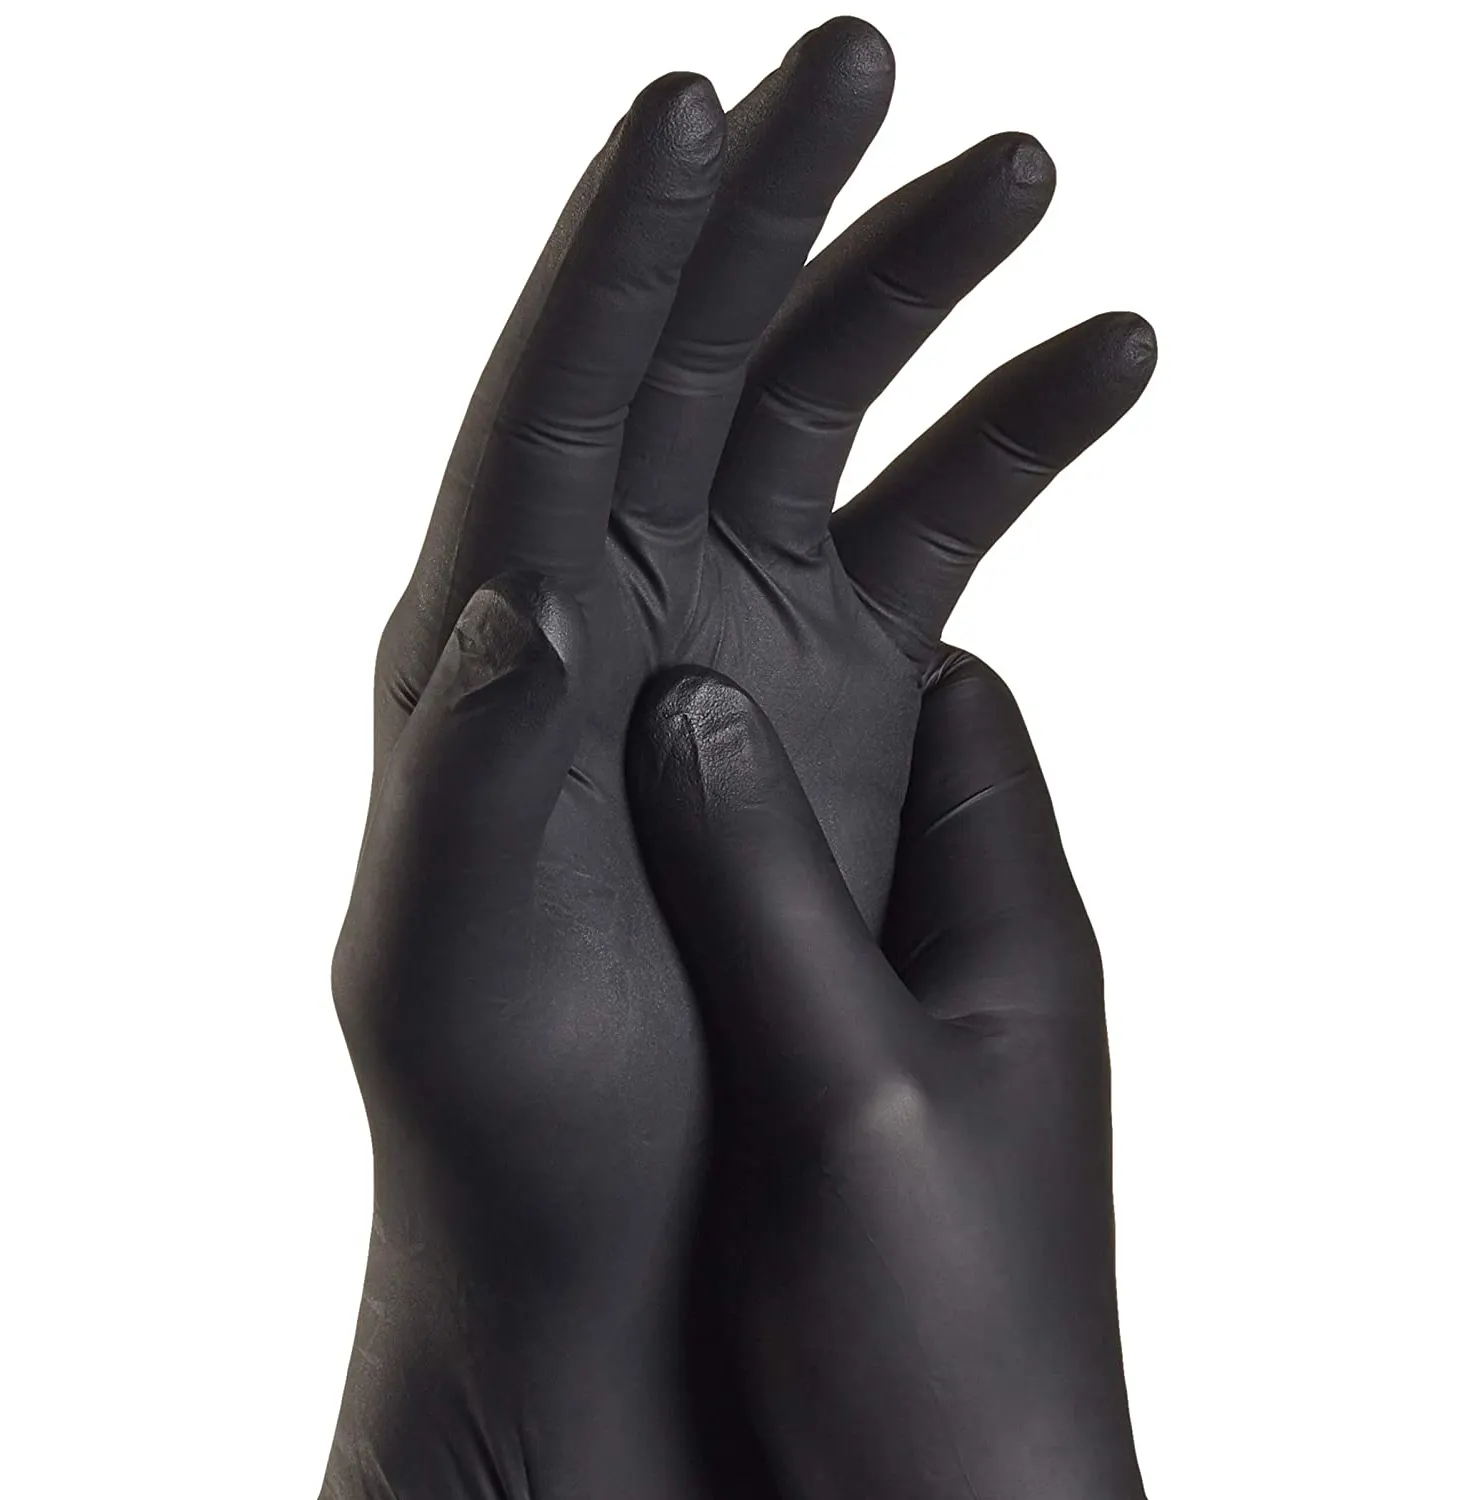 Box Pack Disposable Glov CE Plastic Nitrile Tpe Hand Gloves Powder Free Black